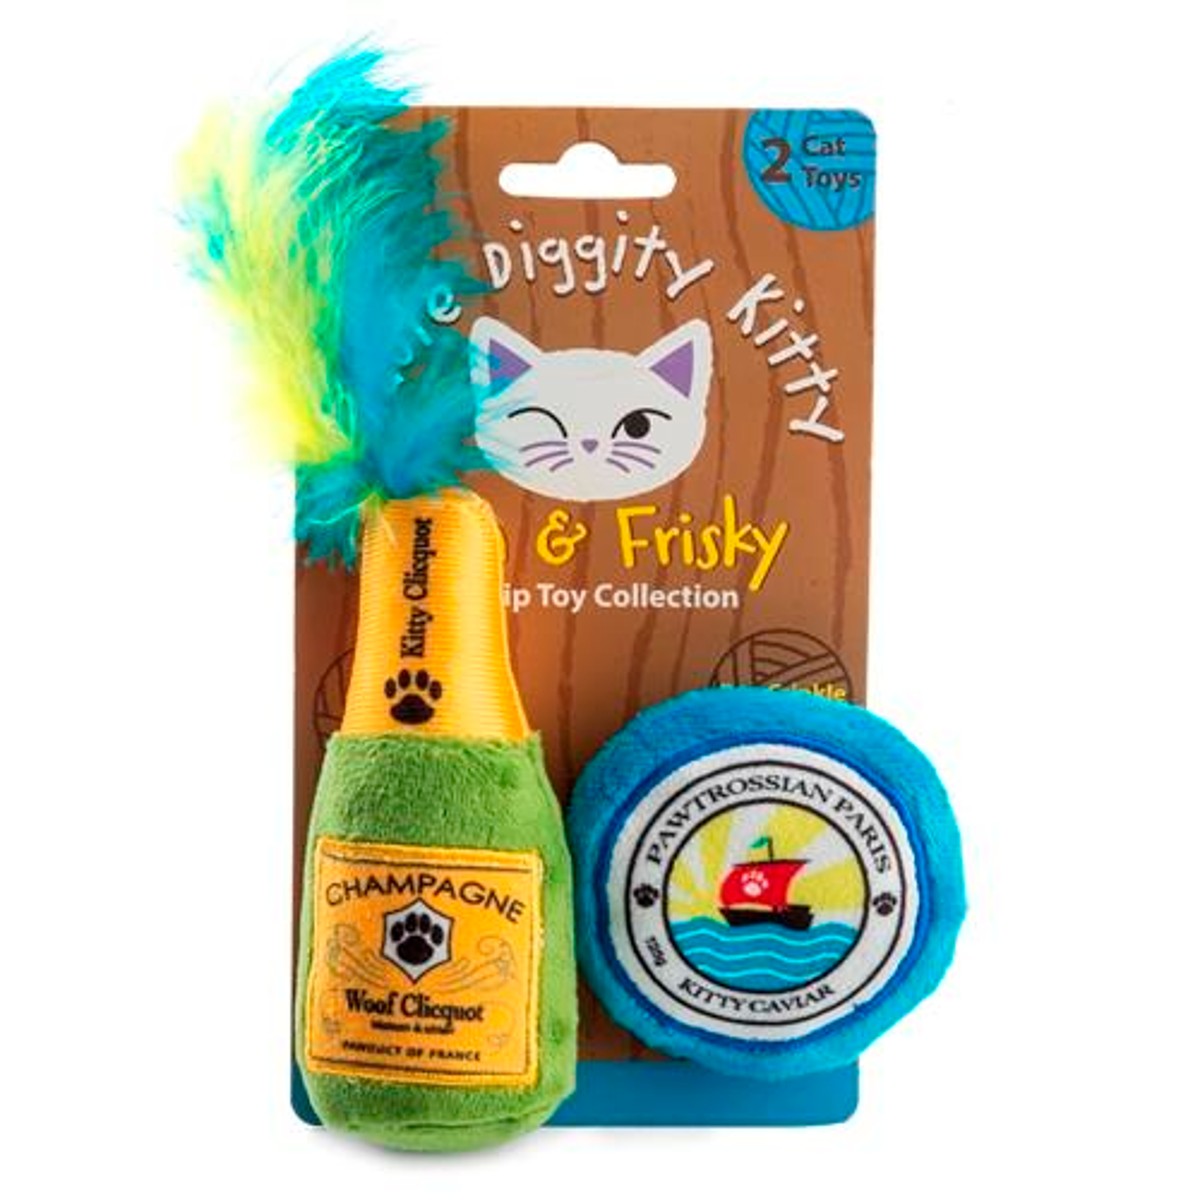 Haute Diggity Dog + Kitty Organic Catnip Cat Toys - Kitty Clicquot (Bottle & Caviar)